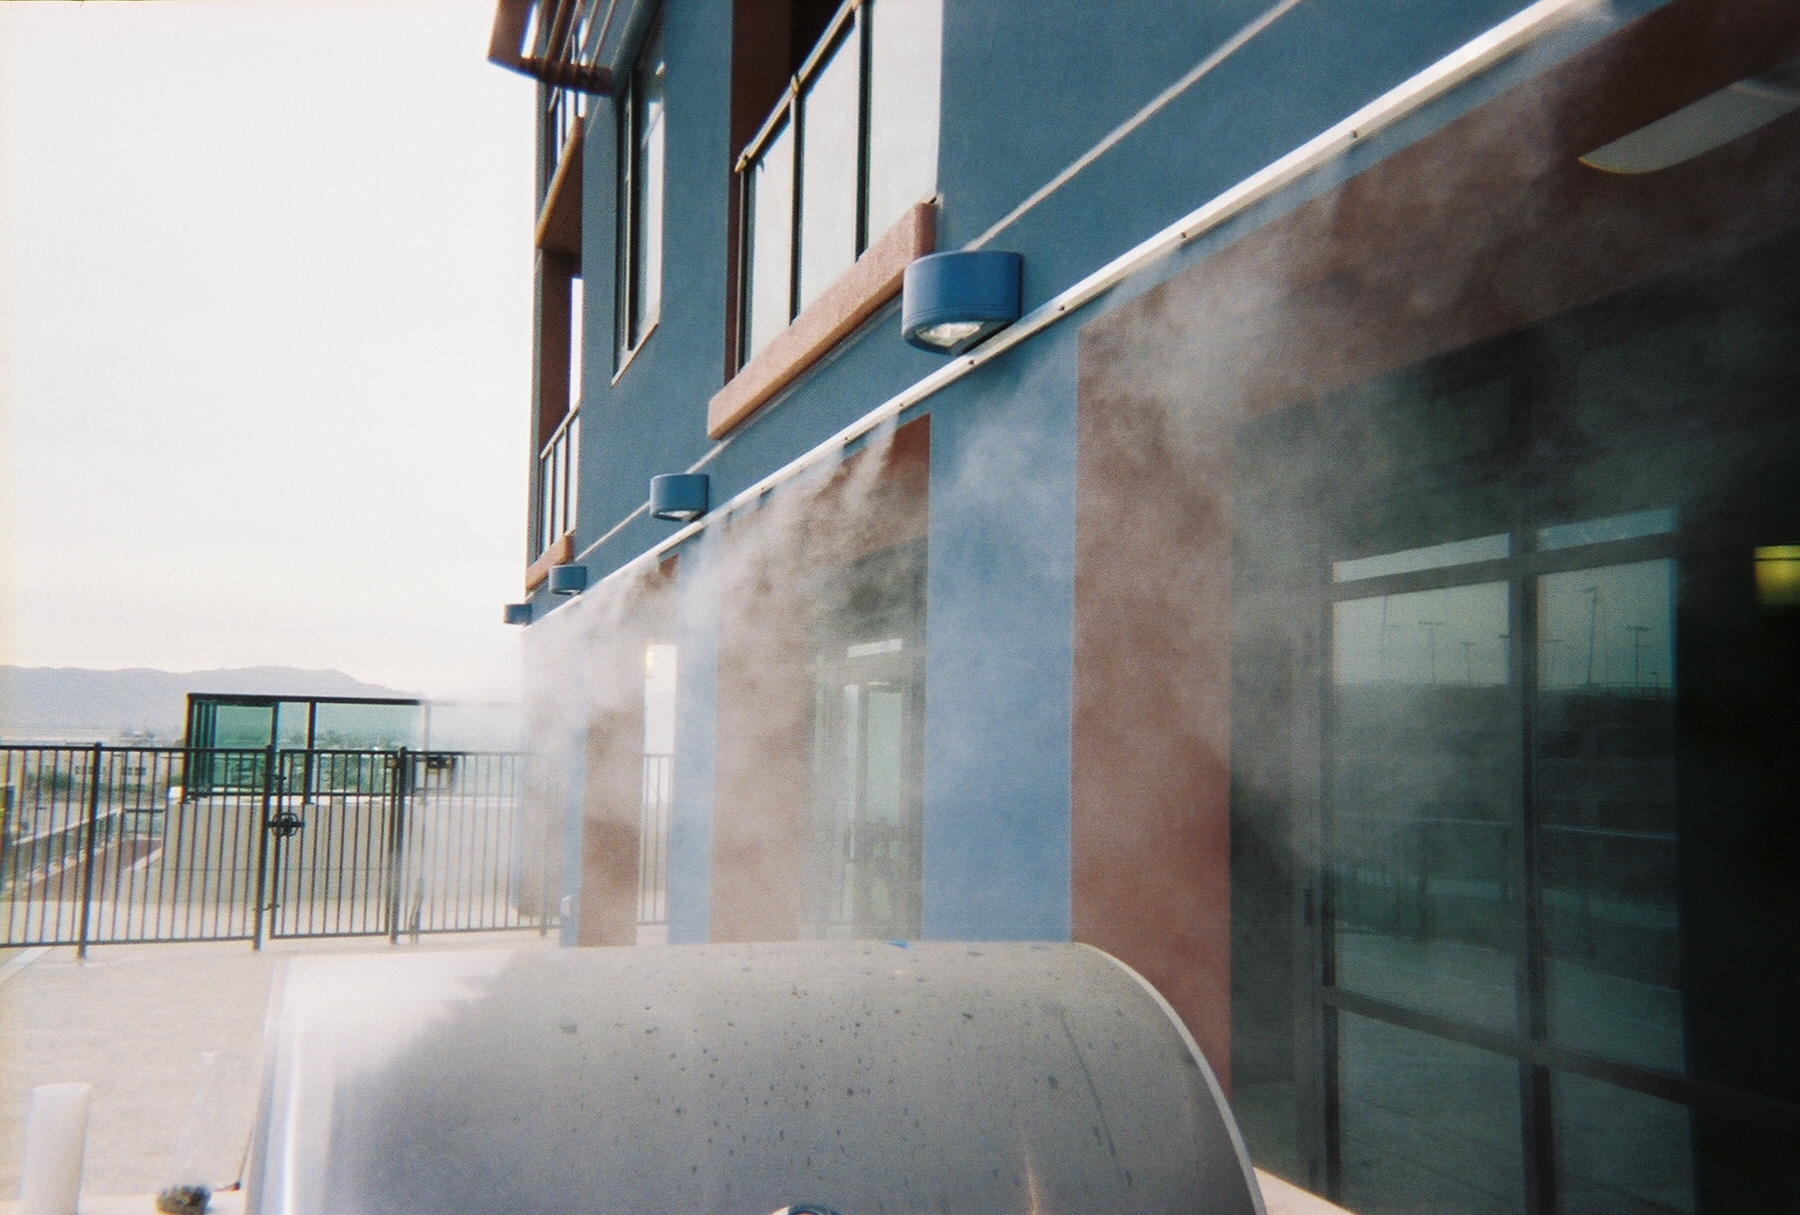 Universal Fog Misting Systems Inc Photo